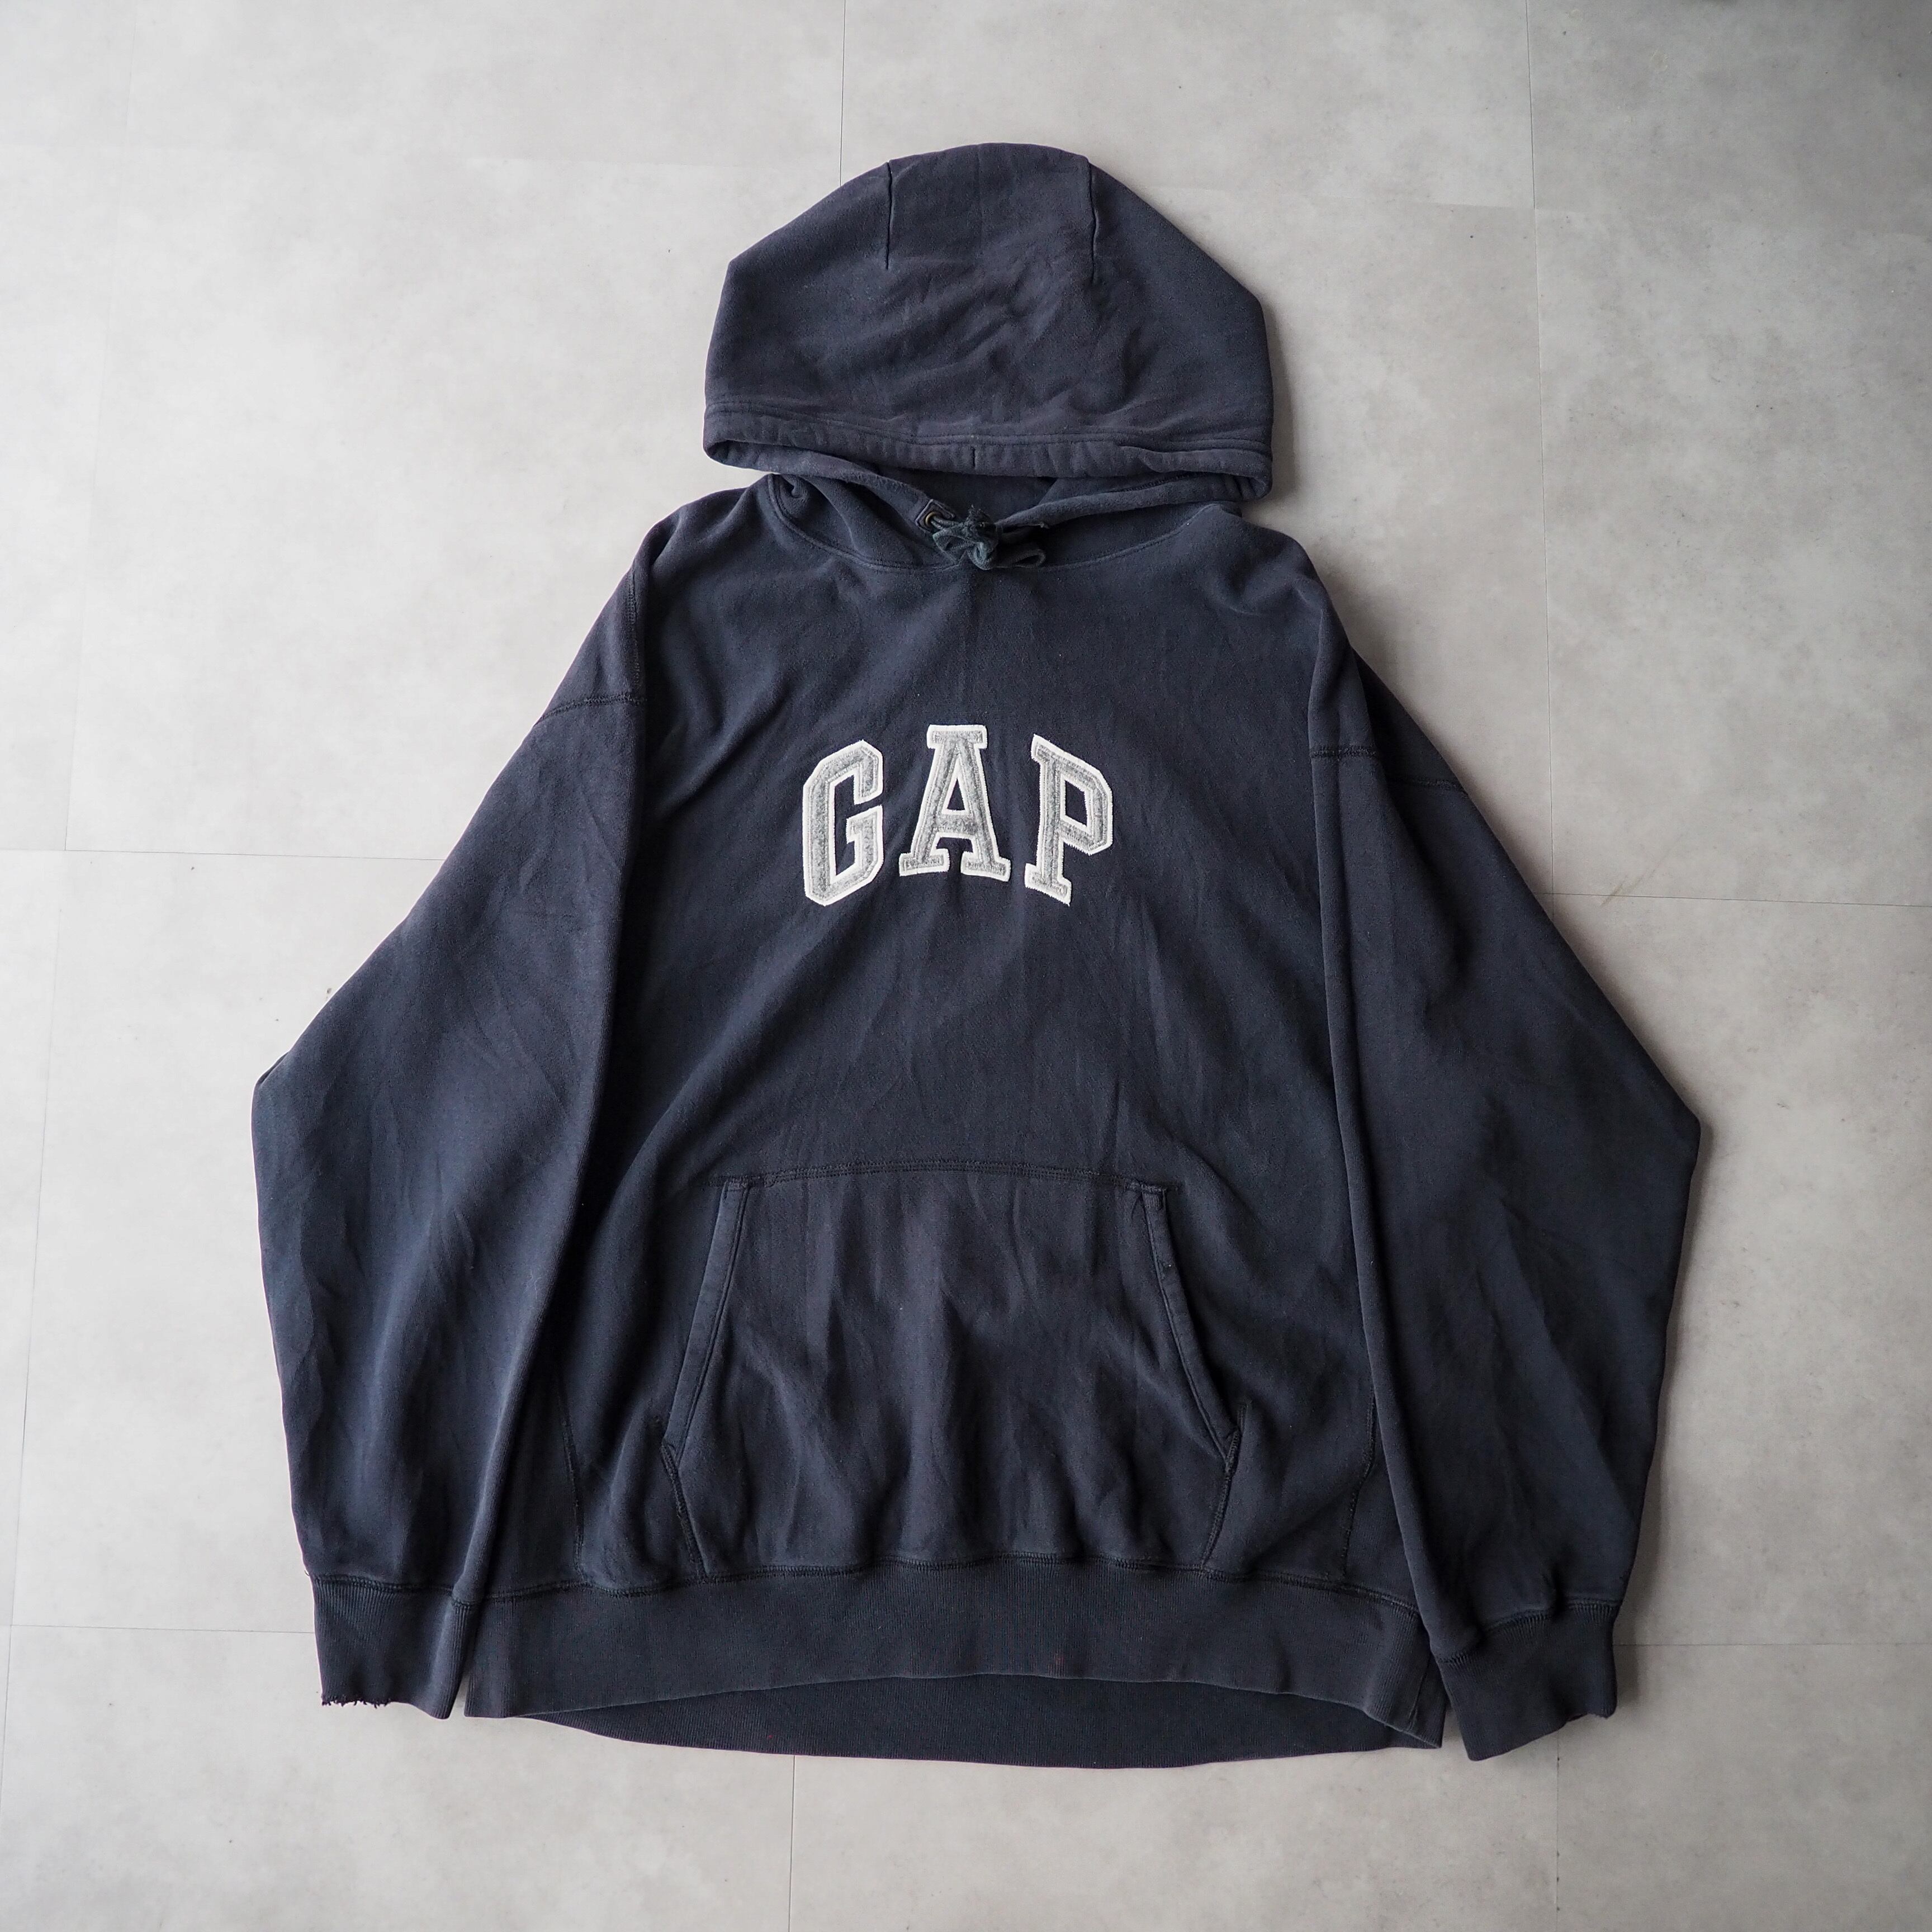 00s “GAP” arch logo hoodie XL 00年代 ギャップ リバースウィーブタイプ フーディー ネイビー パーカー